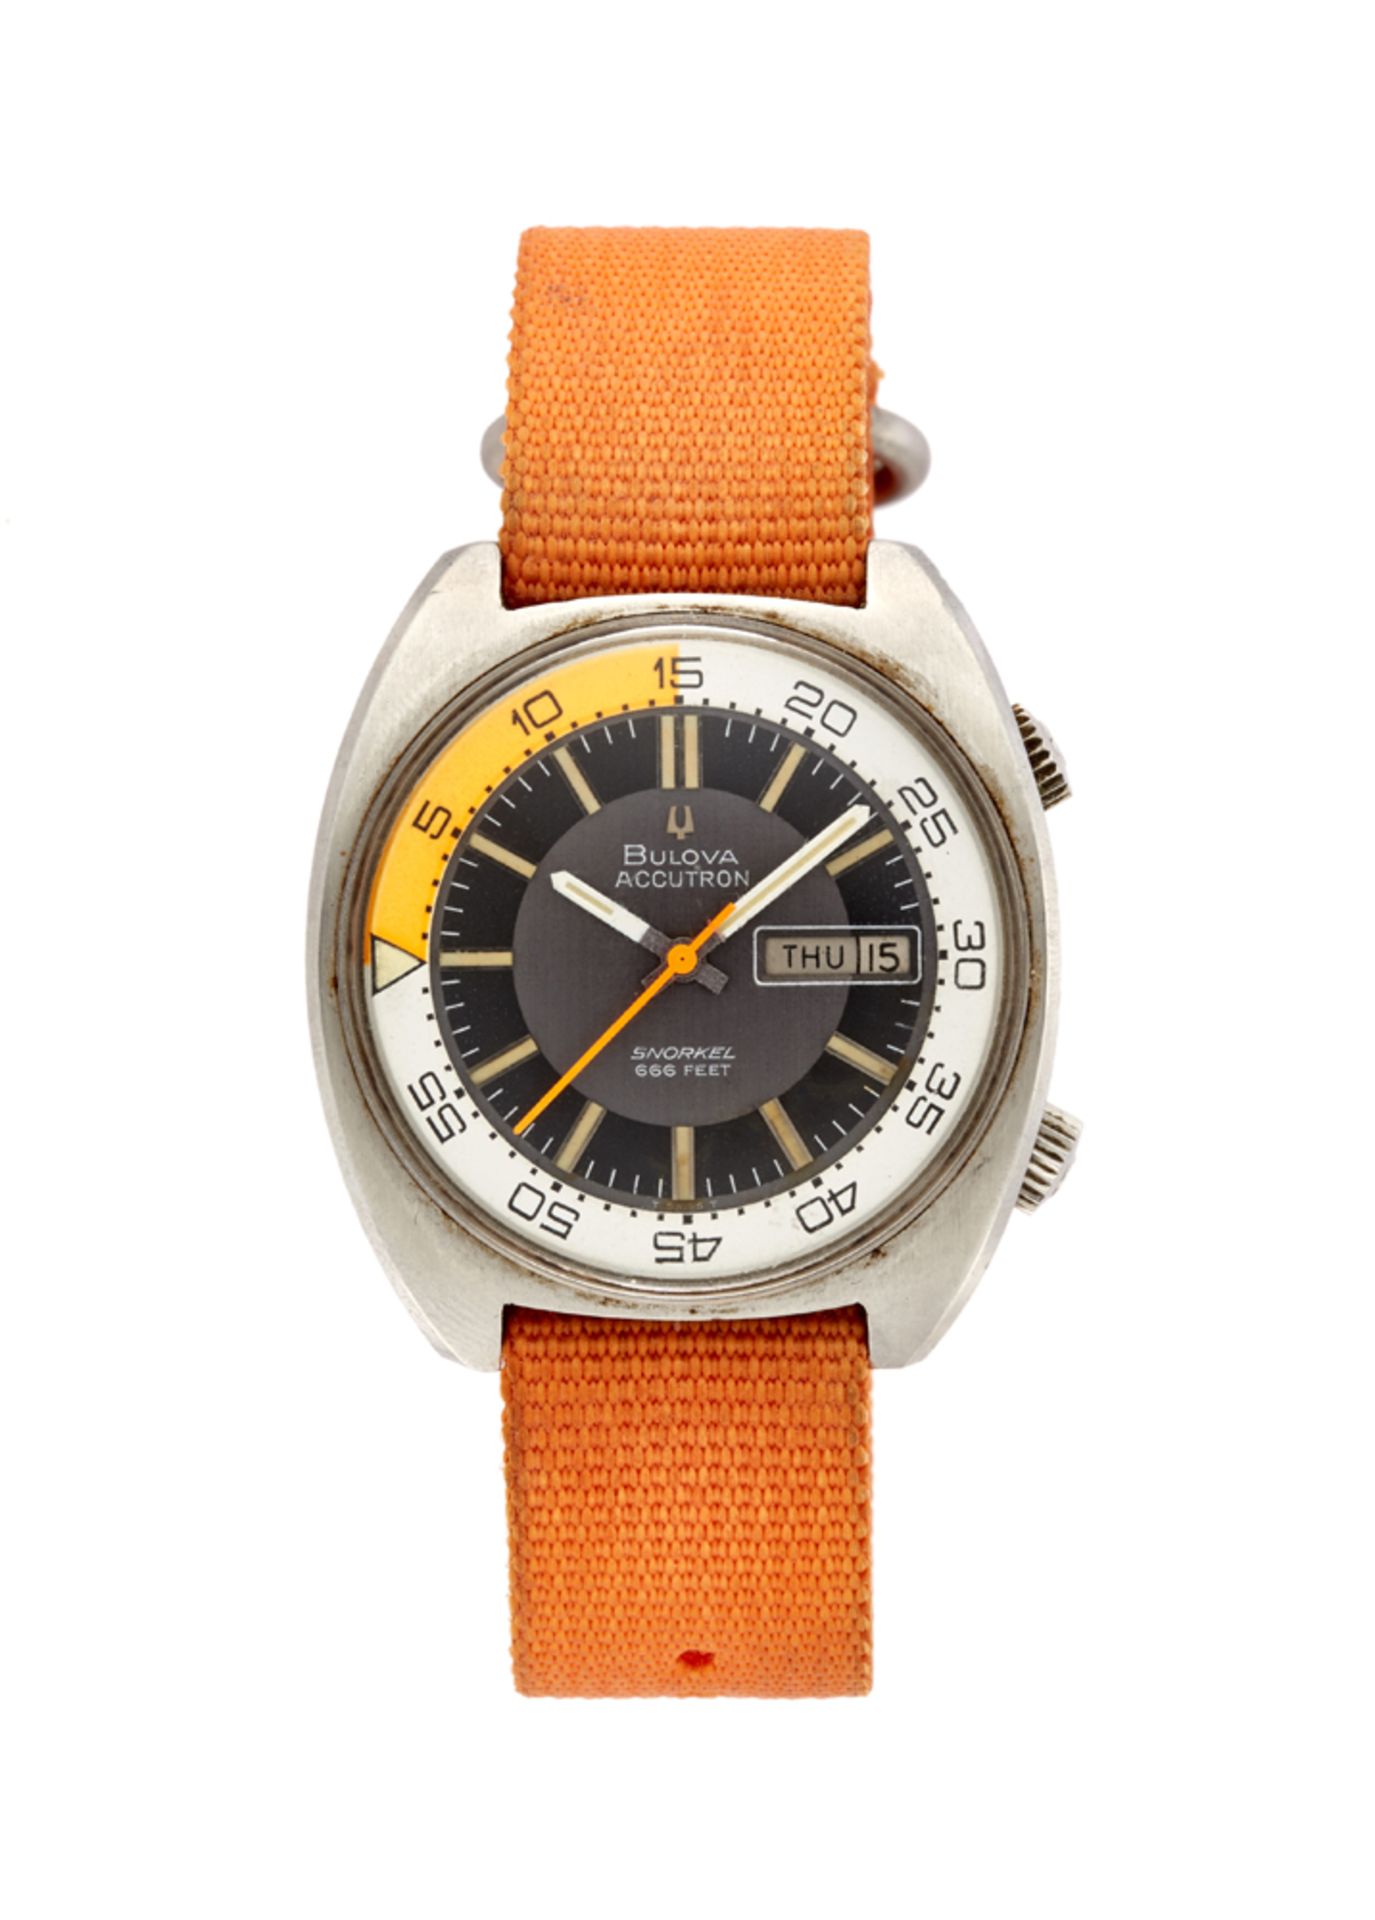 BULOVA ACCUTRON SNORKELGent's steel wristwatch1970sDial, movement and case signedDiapason